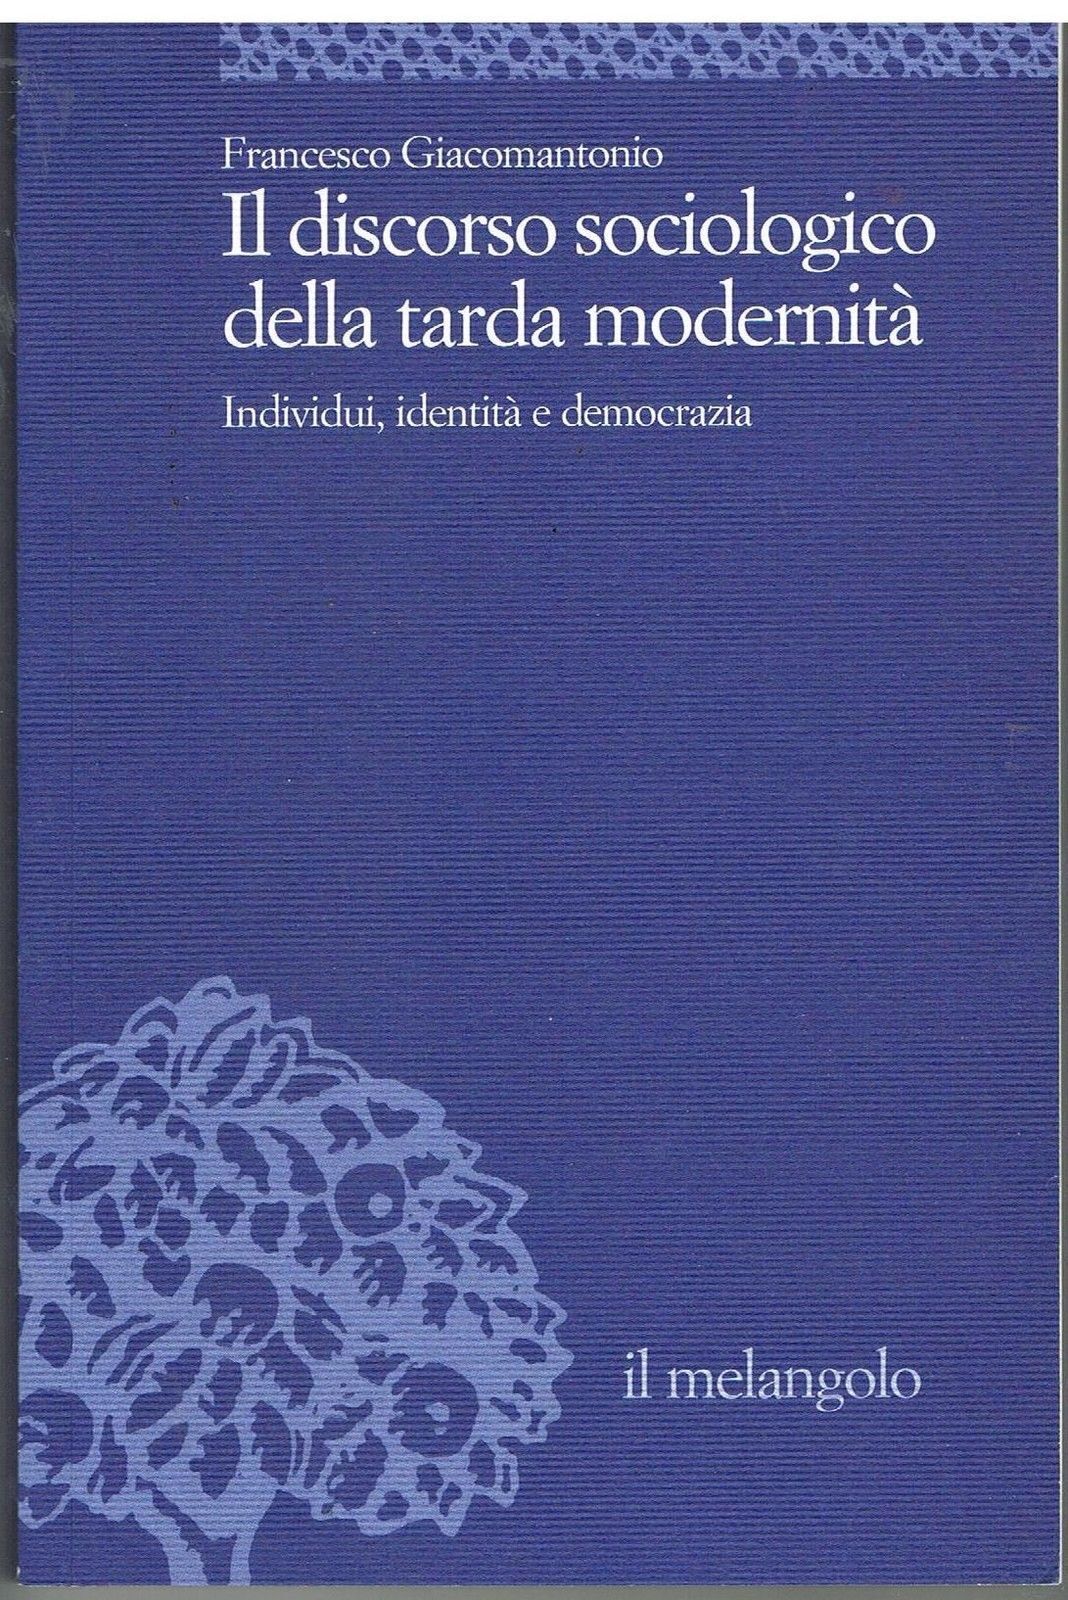 IL DISCORSO SOCIOLOGICO DELLA TARDA MODERNITA' - GIACOMANTONIO - MELANGOLO 2007 